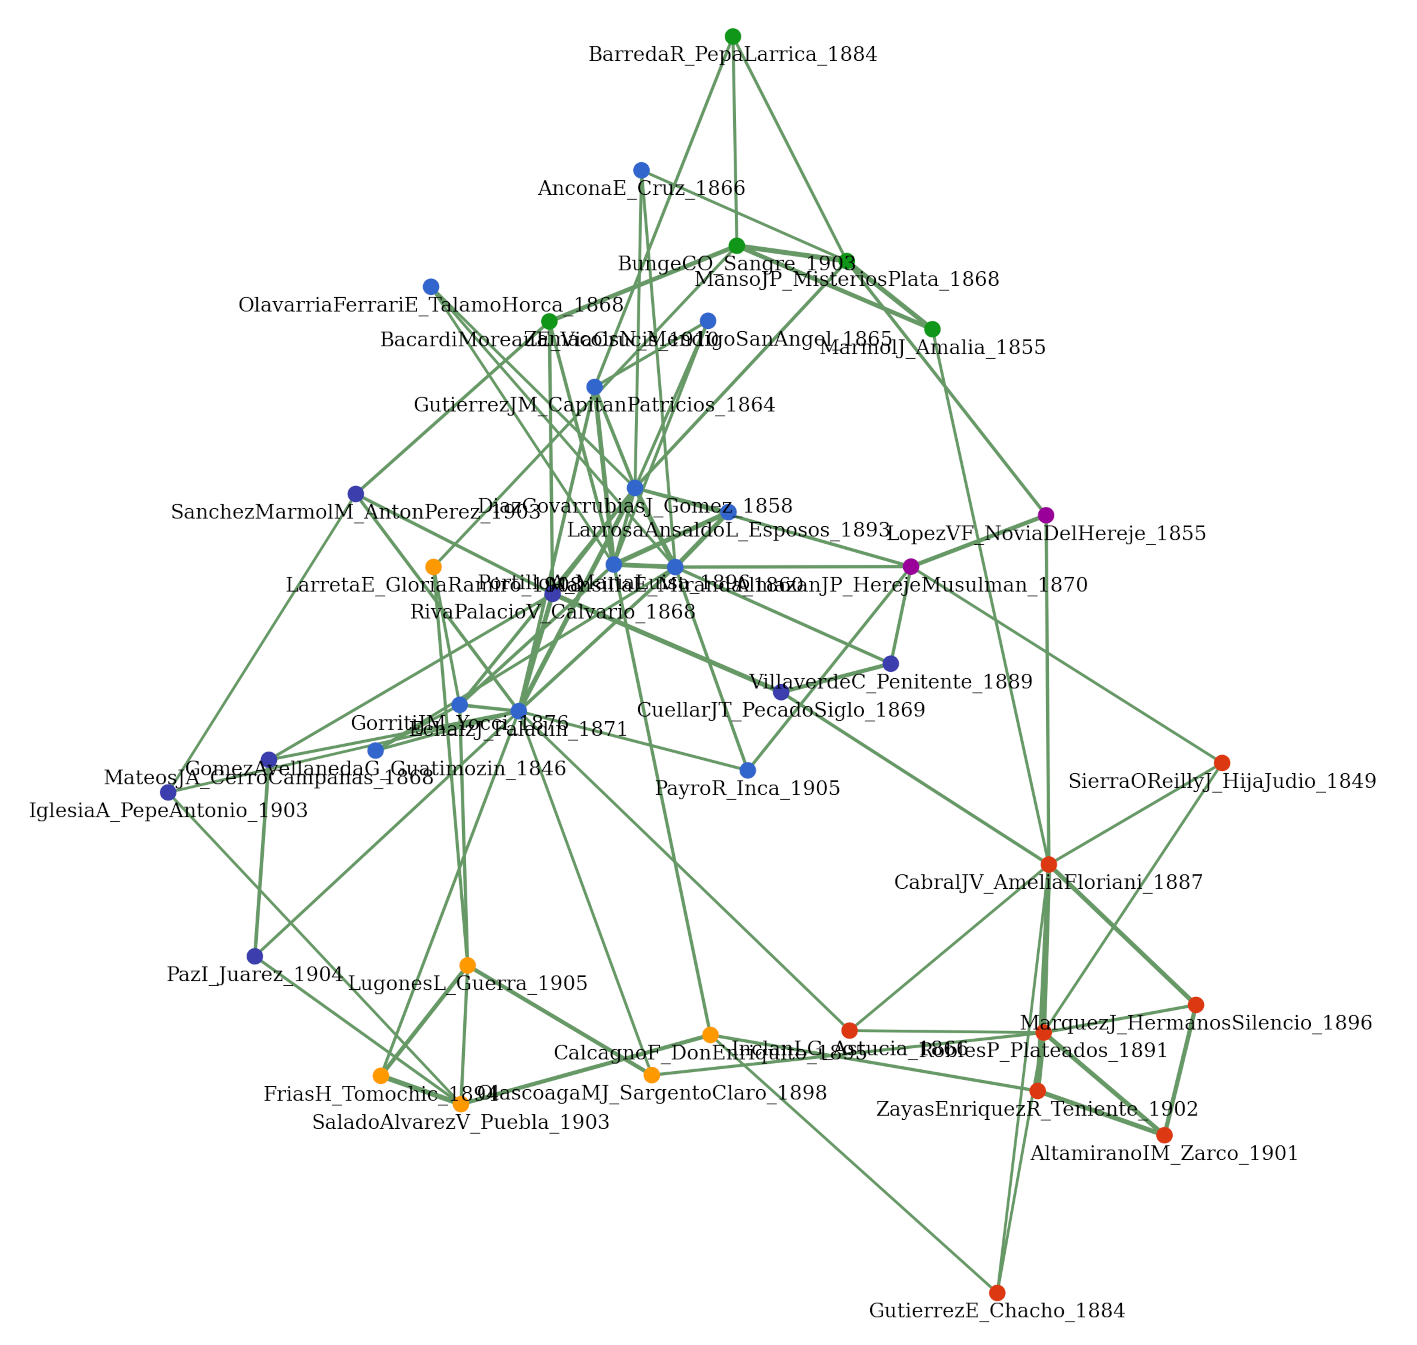 Network of historical novels based on topics (HIST).